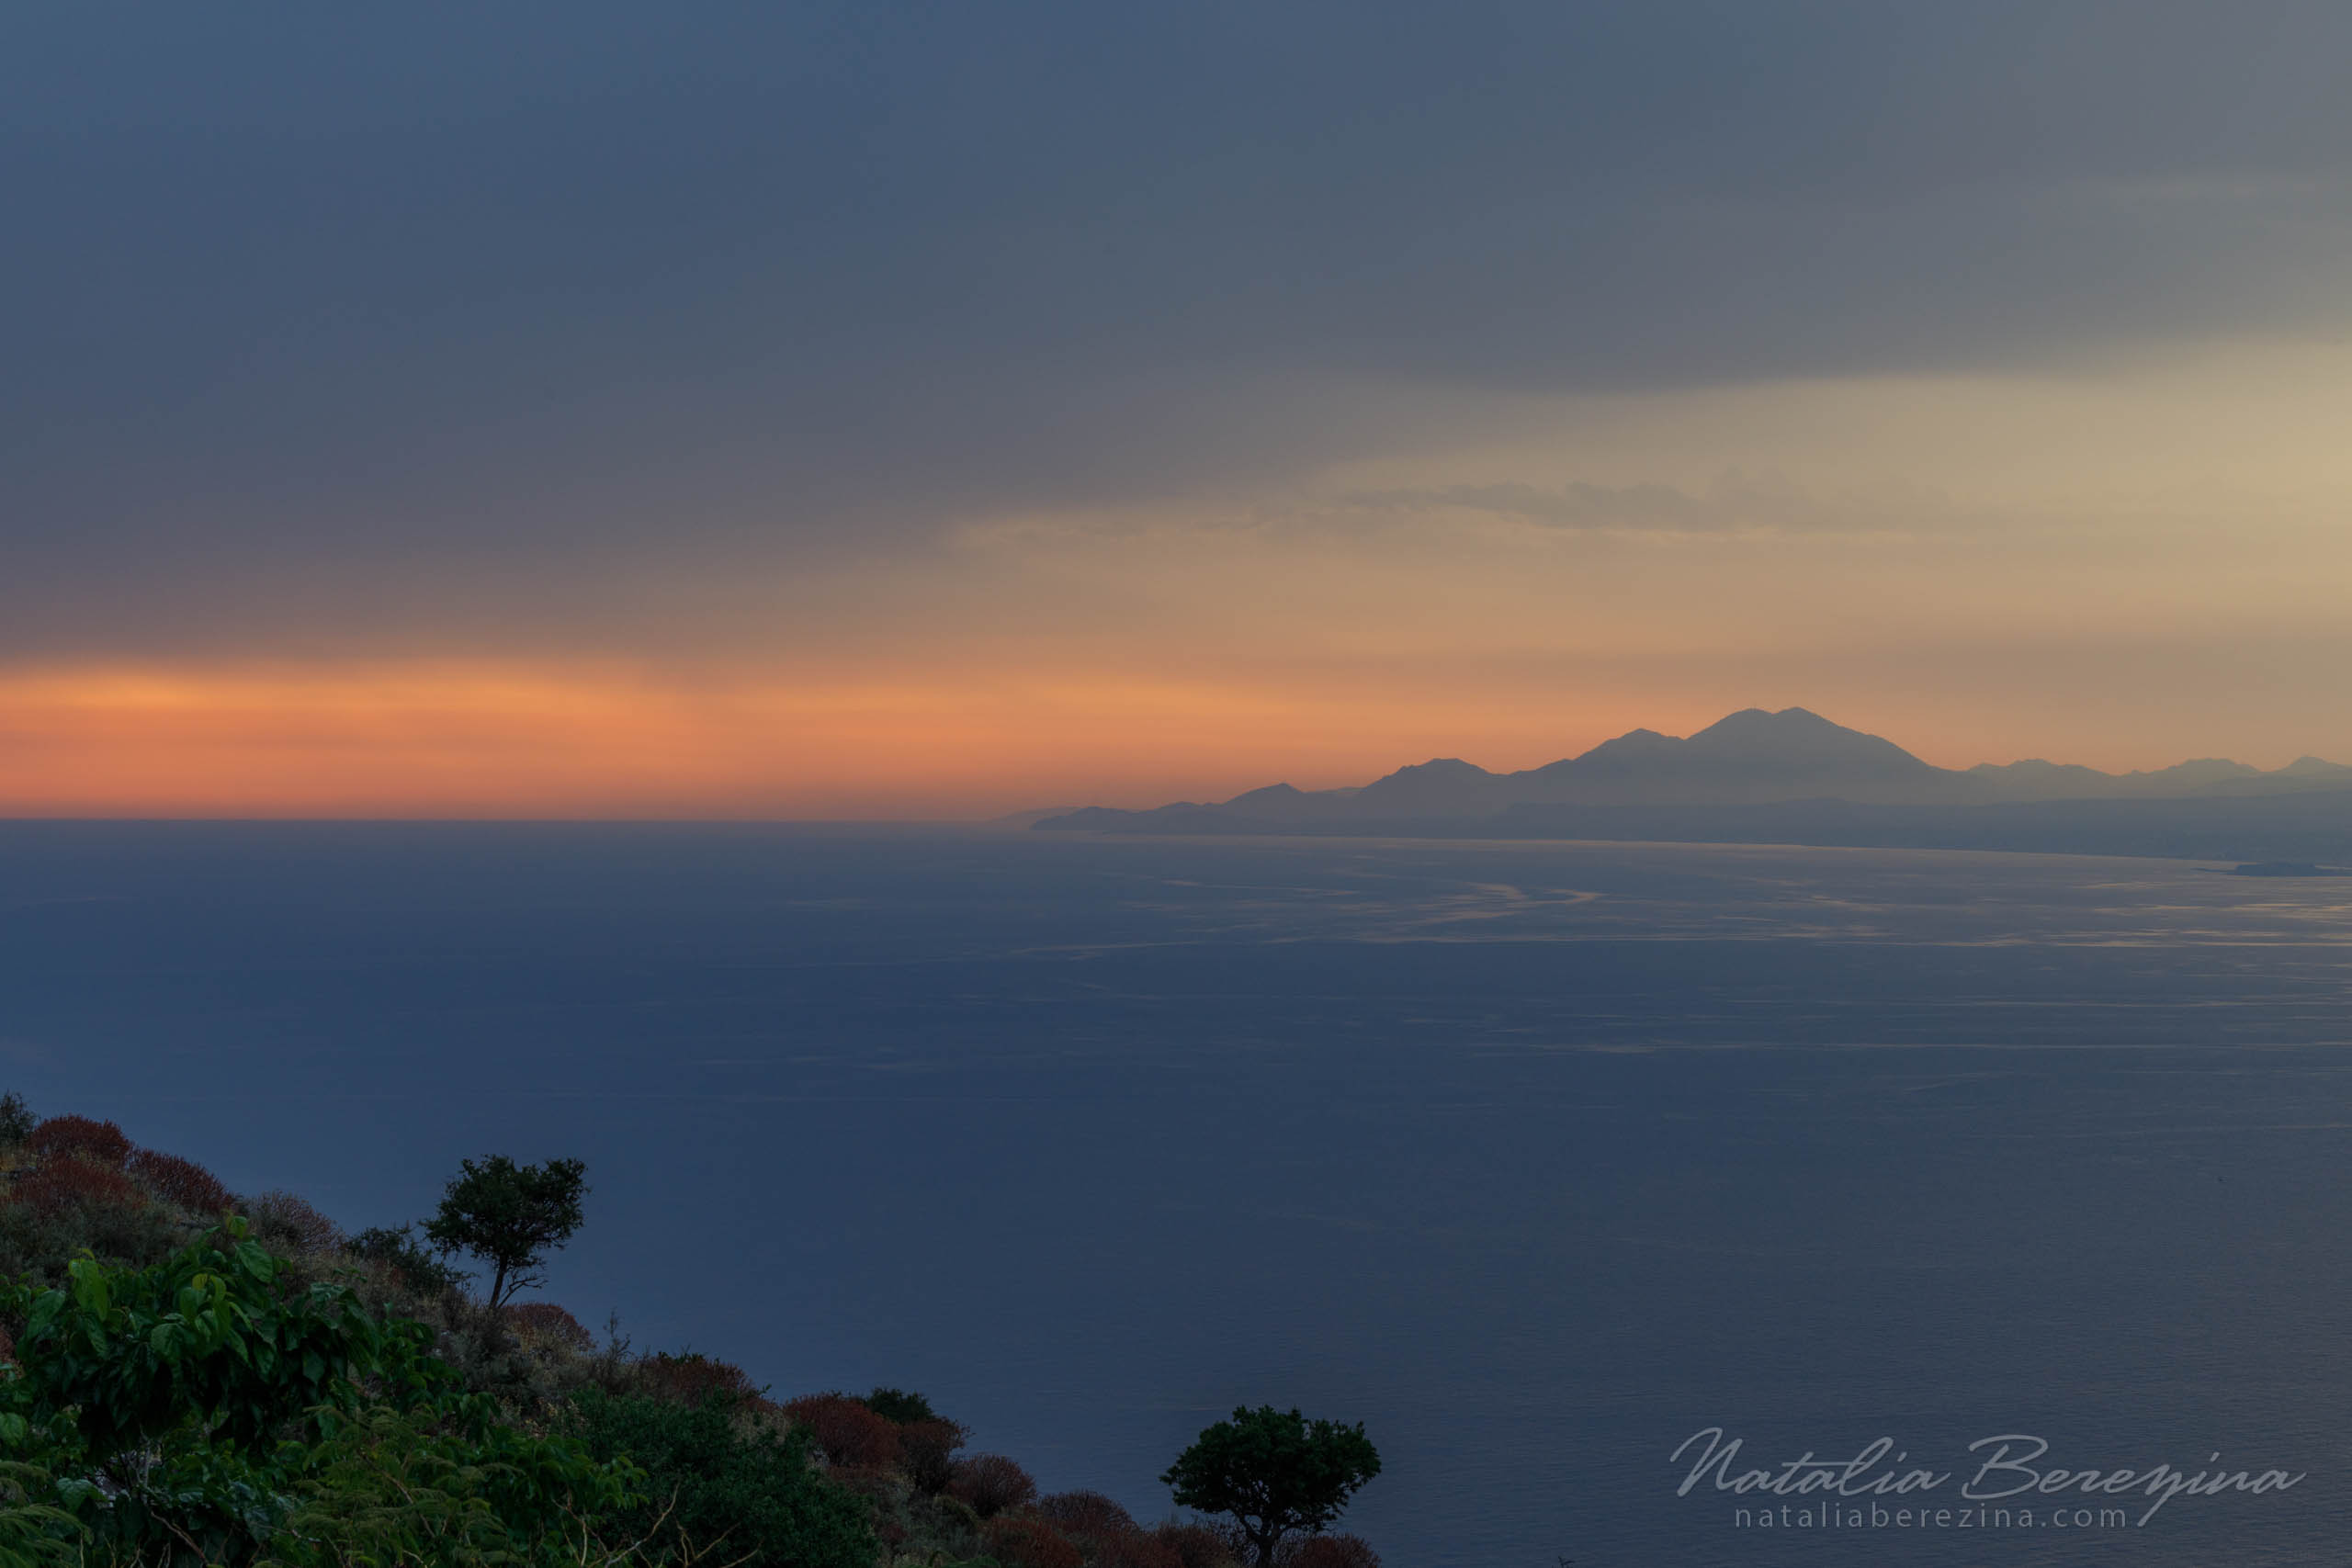 Greece, Crete, landscape, mountains, sunrise, skyline, cloud, orange CR1-NB7B6A8141 - Crete, Greece - Natalia Berezina Photography